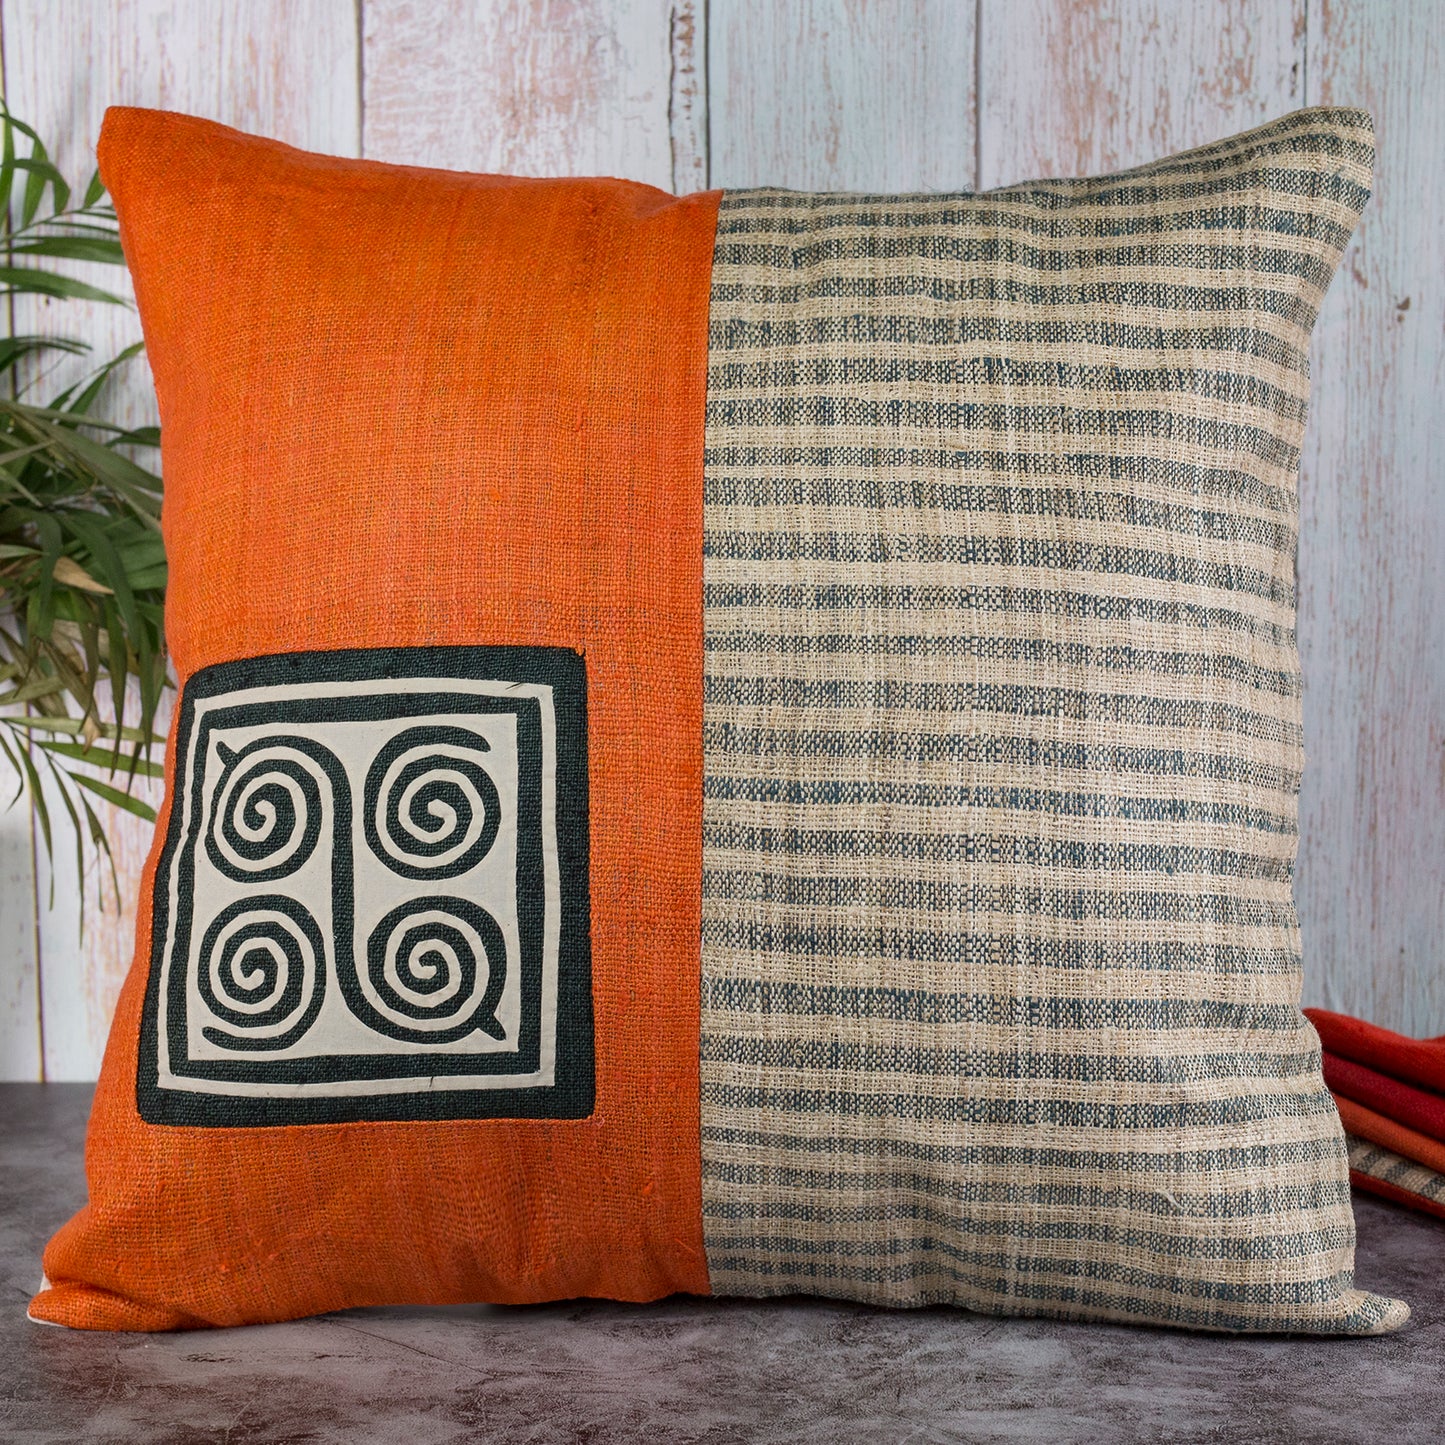 Hemp Cushion Cover in Orange - H'mong pattern, handwoven fabric stripes, handmade 100%